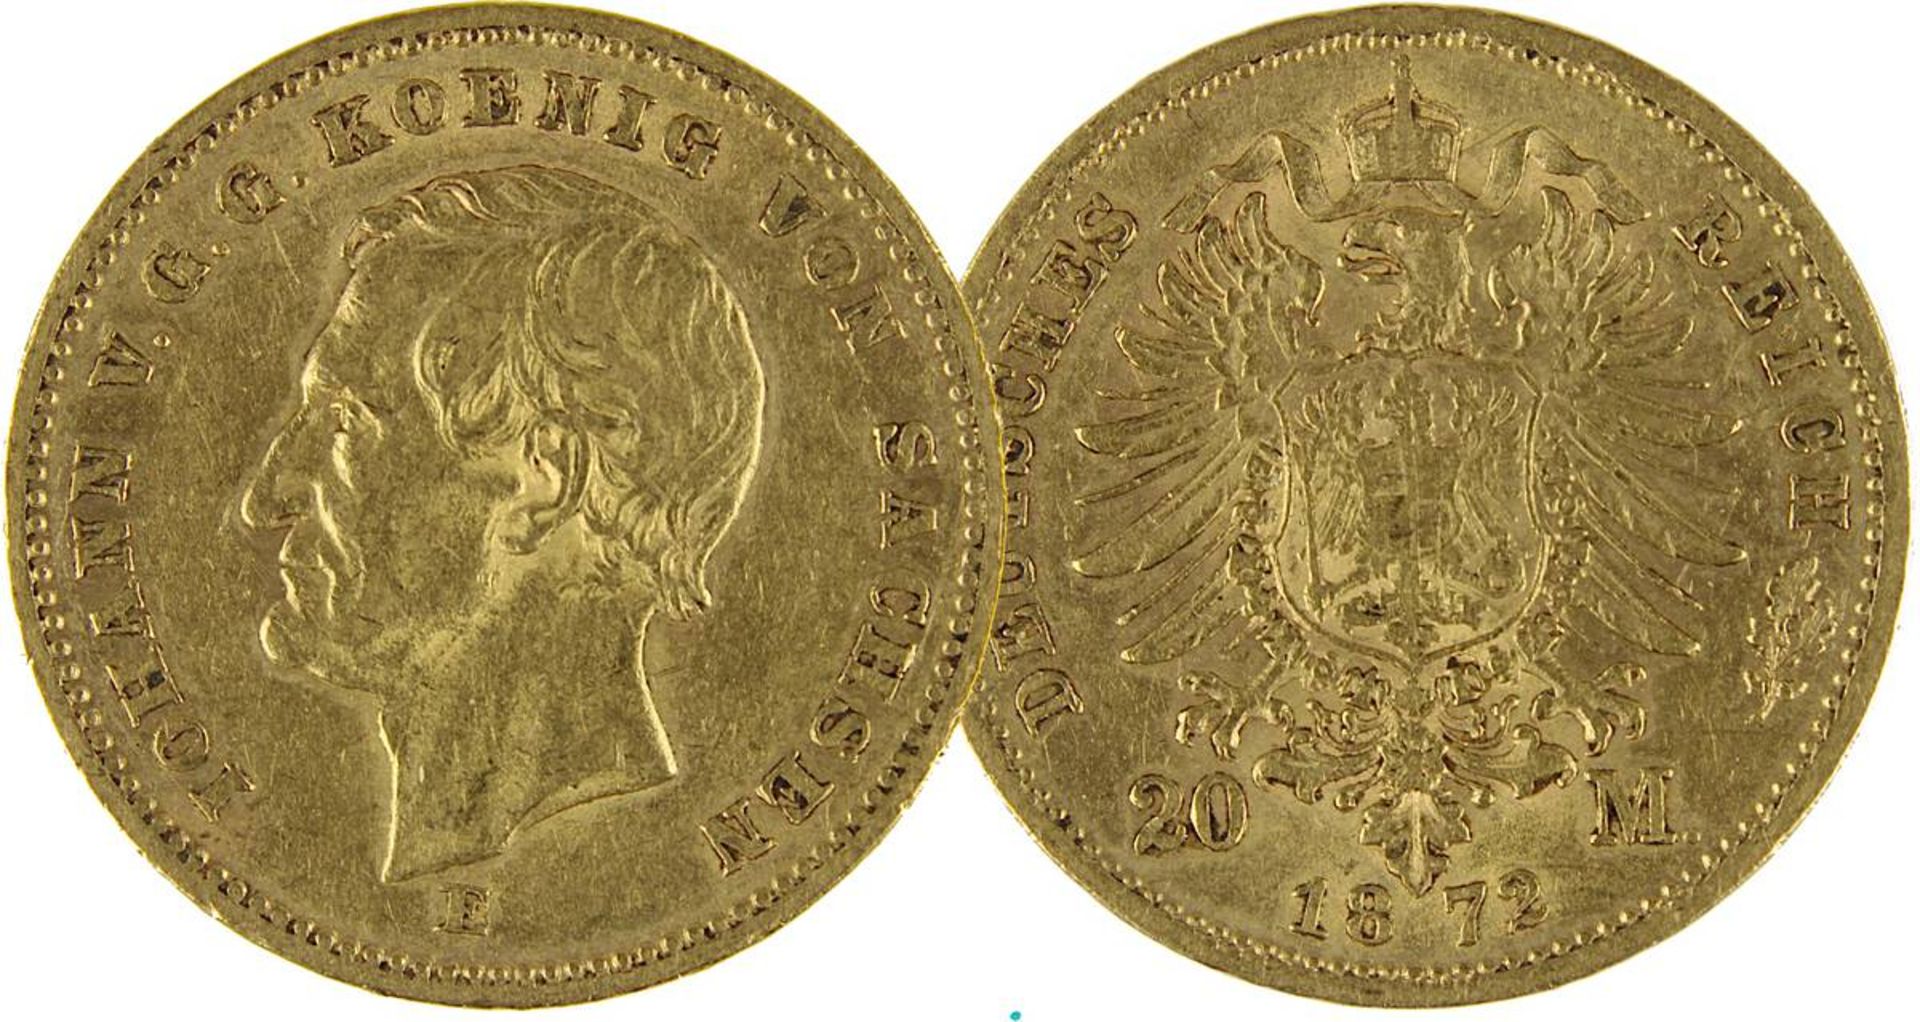 Goldmünze 20 Mark, Sachsen 1872 König Johann, Av. Kopf n. li., darunter E, und Umschrift, Rev.